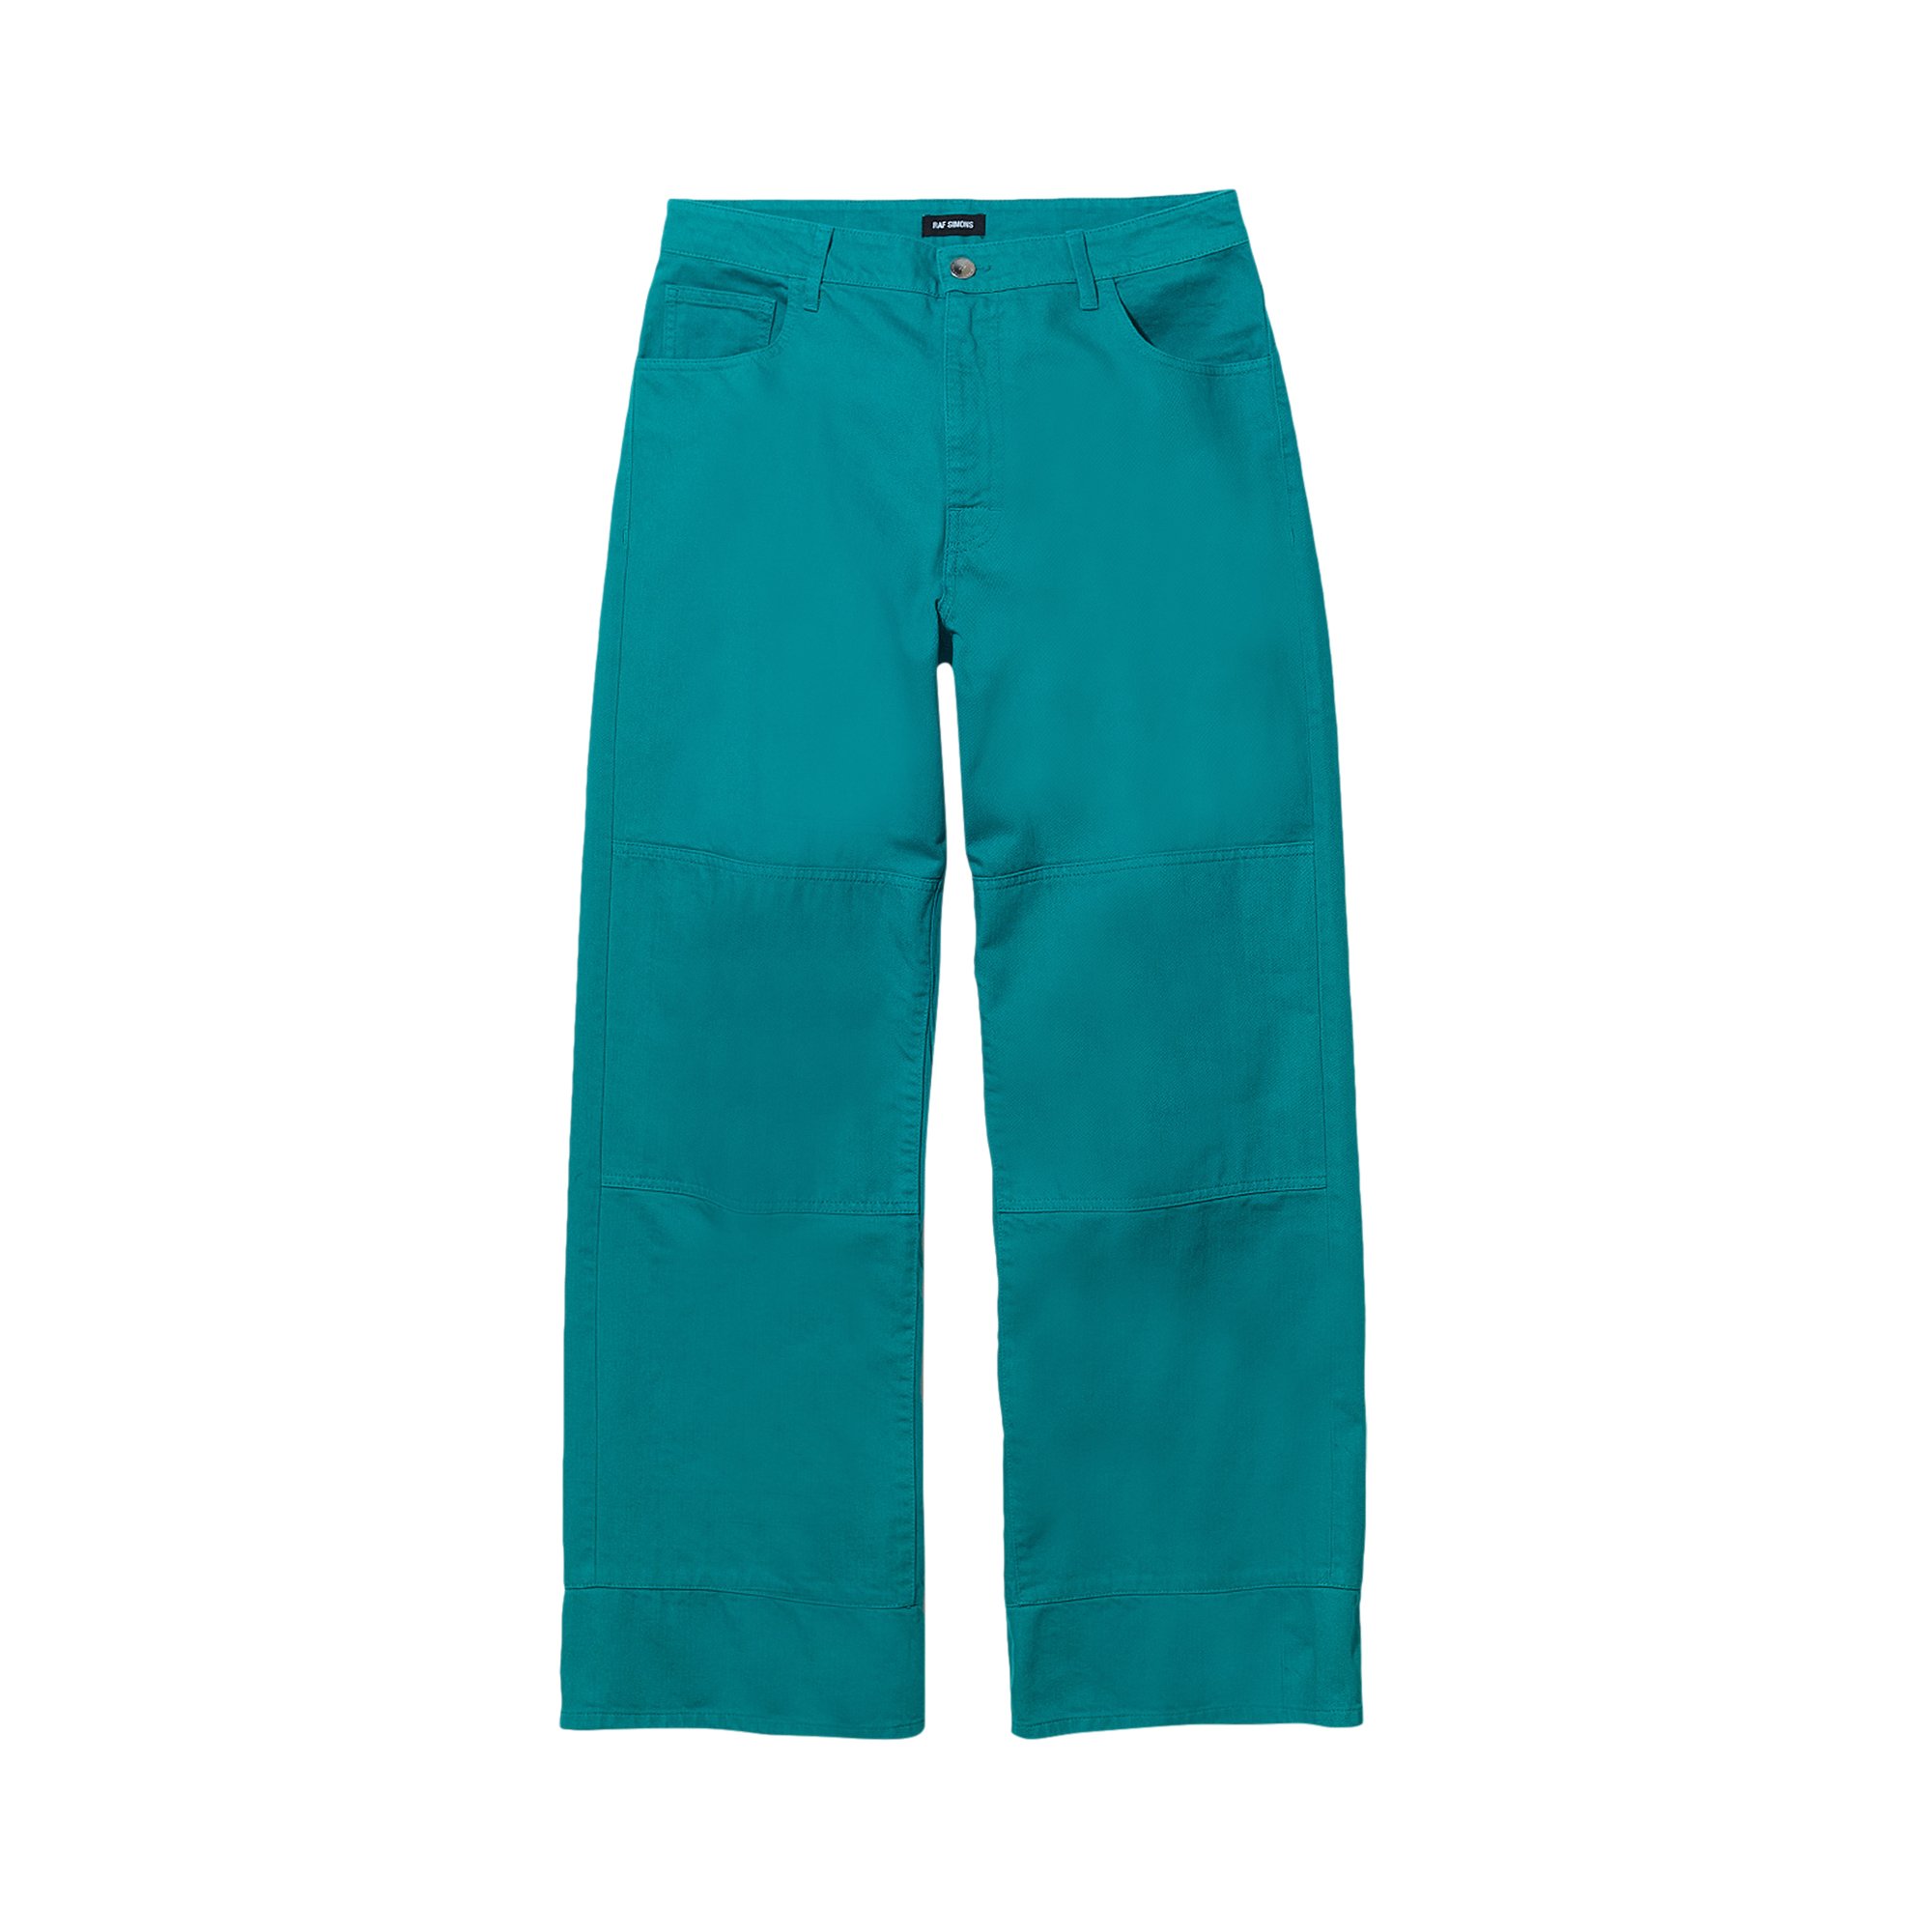 Raf Simons Denim Workwear Pants 'Petrol' | GOAT